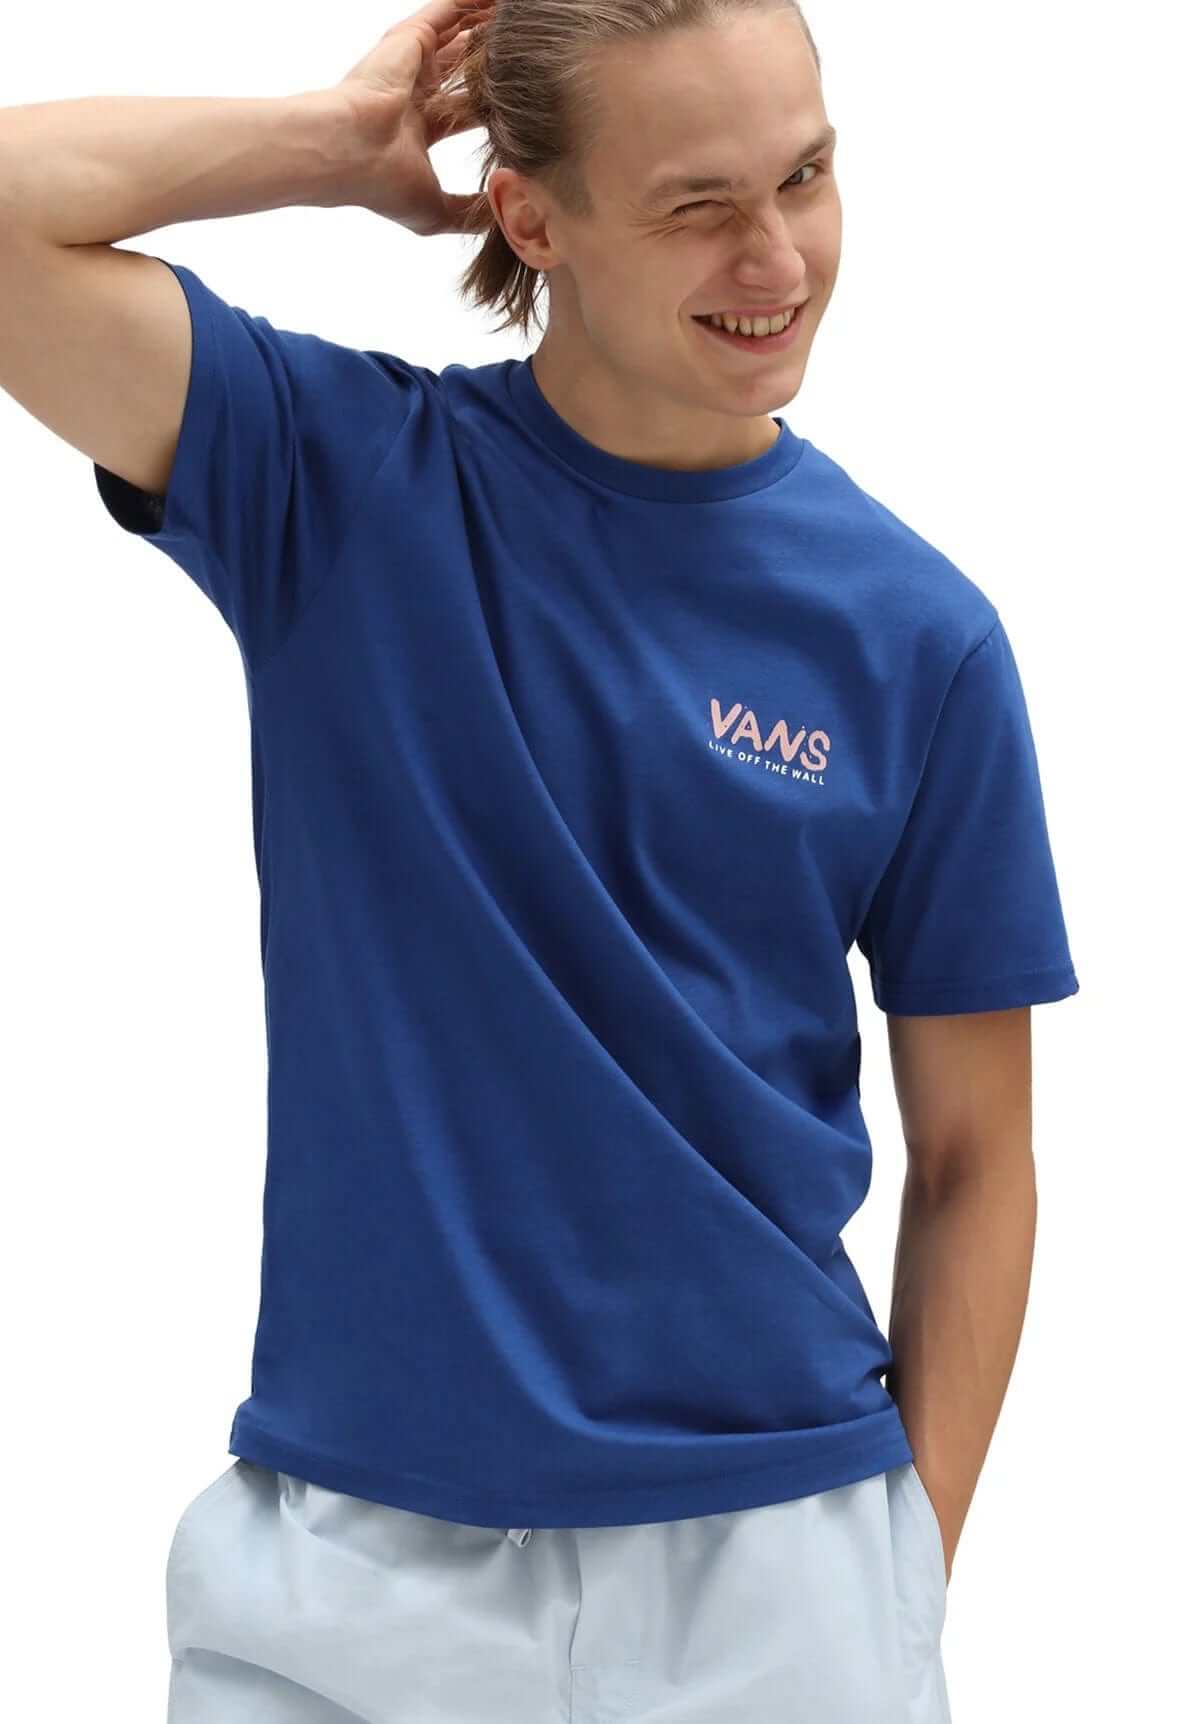 VANS Apparel & Accessories VANS "Off The Wall", 66 Palms T-Shirt, Blue